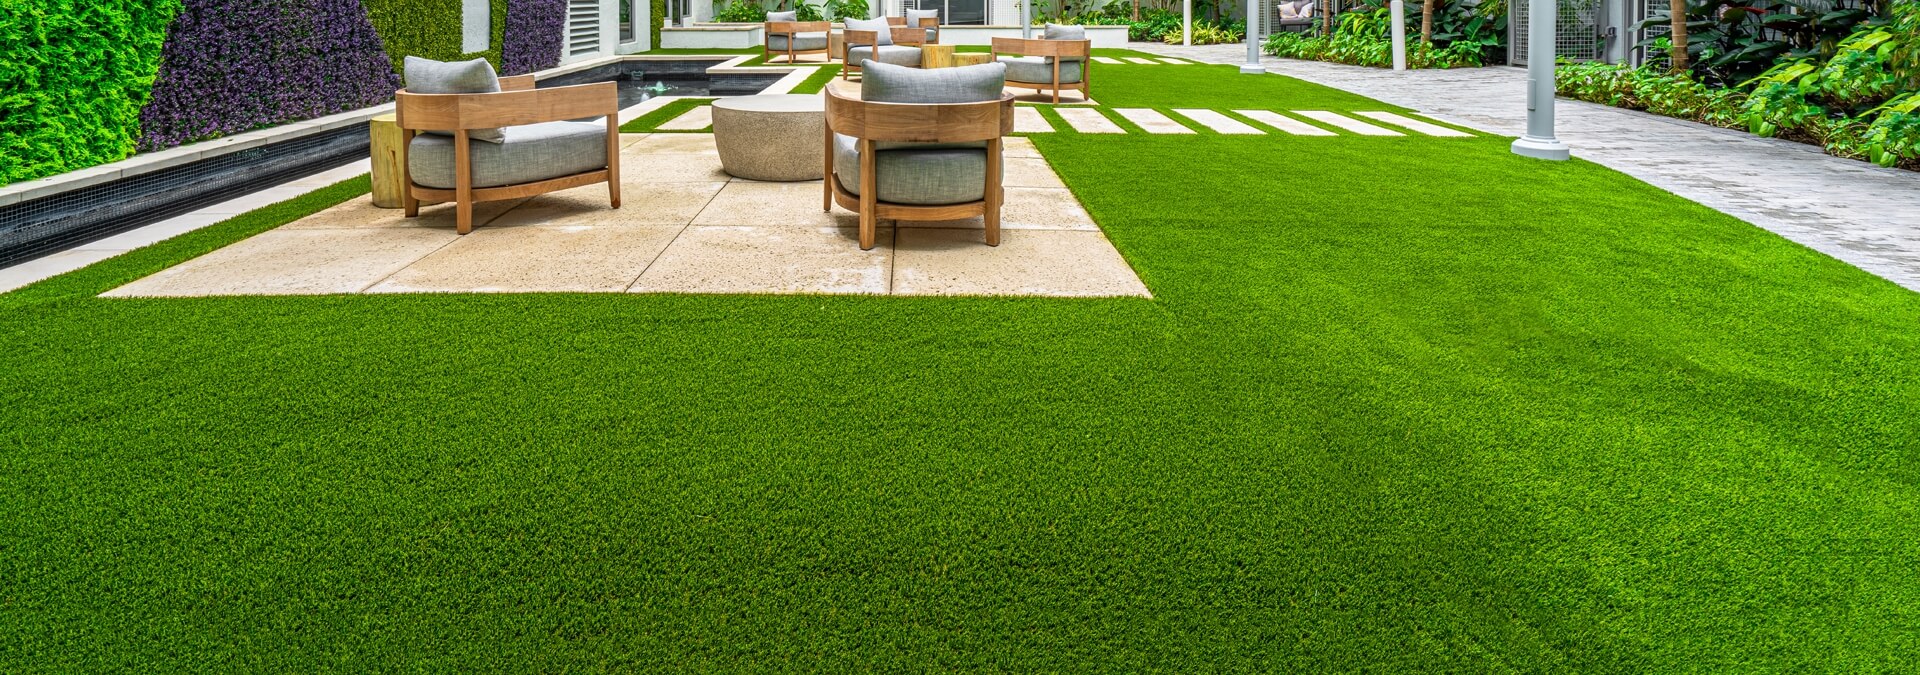 Synthetic Grass Pros | Premium Turf Installation Dallas, TX